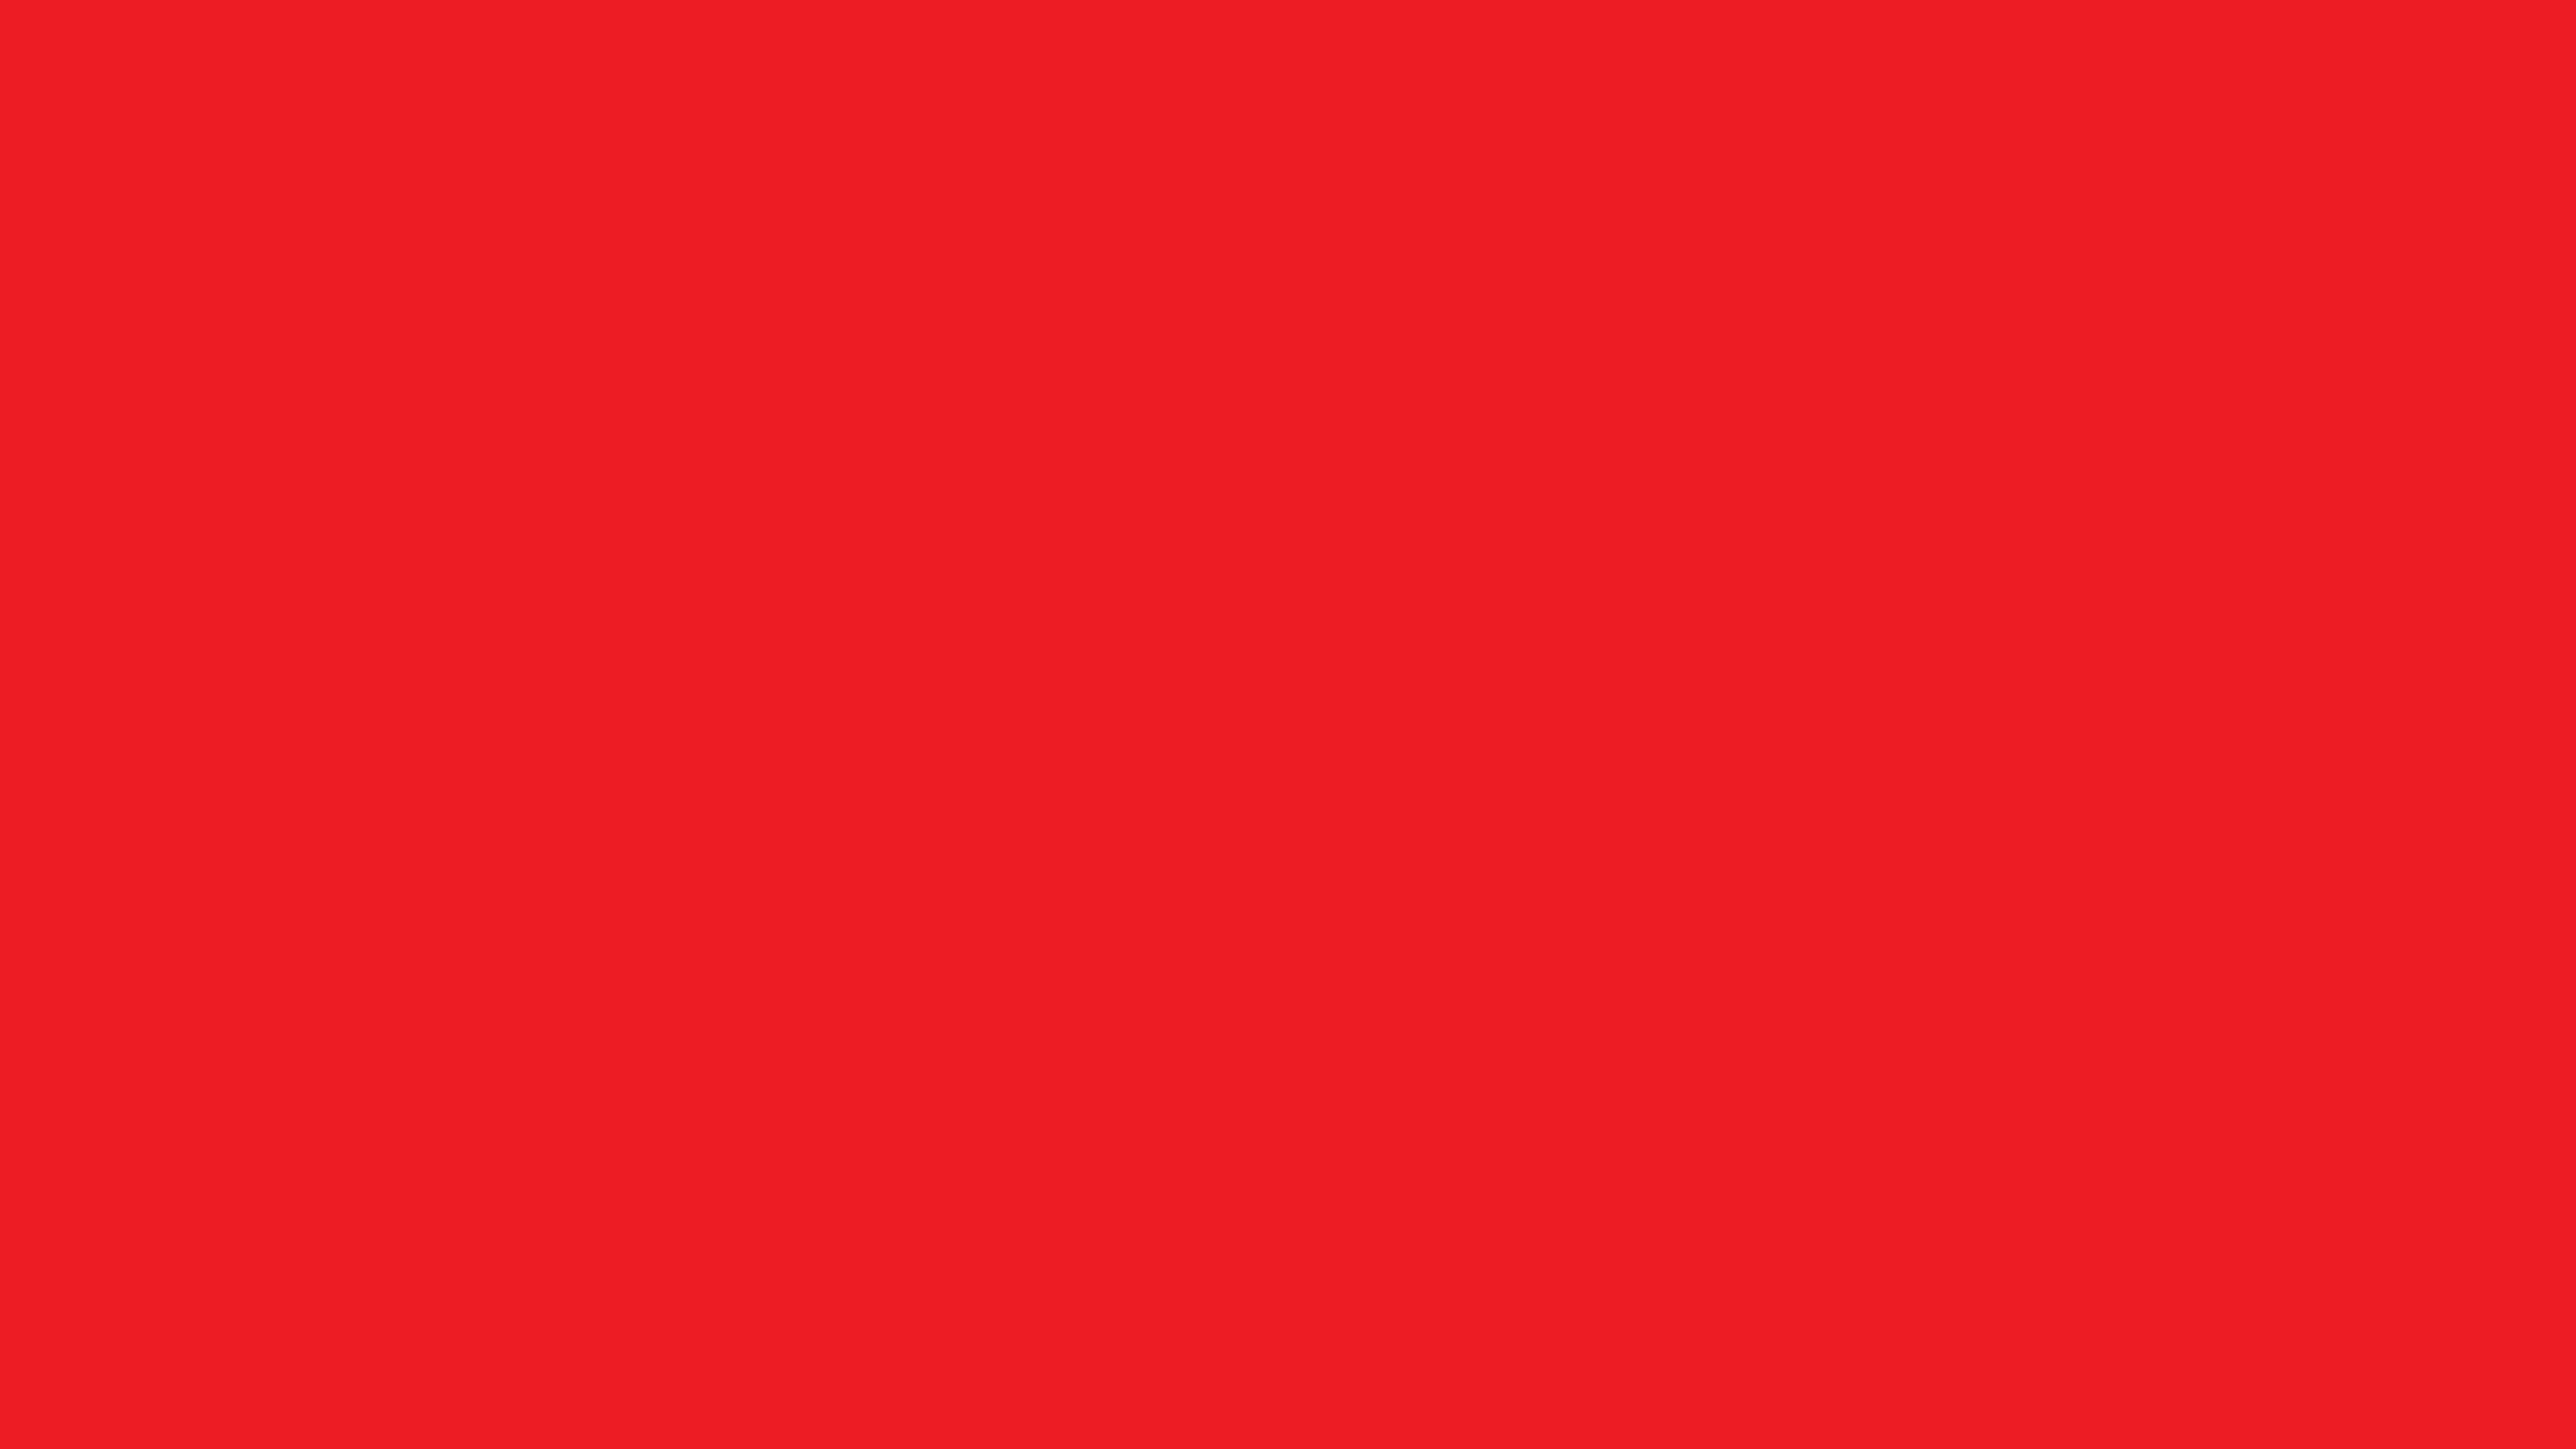 Red Pigment information | Hsl | Rgb | Pantone